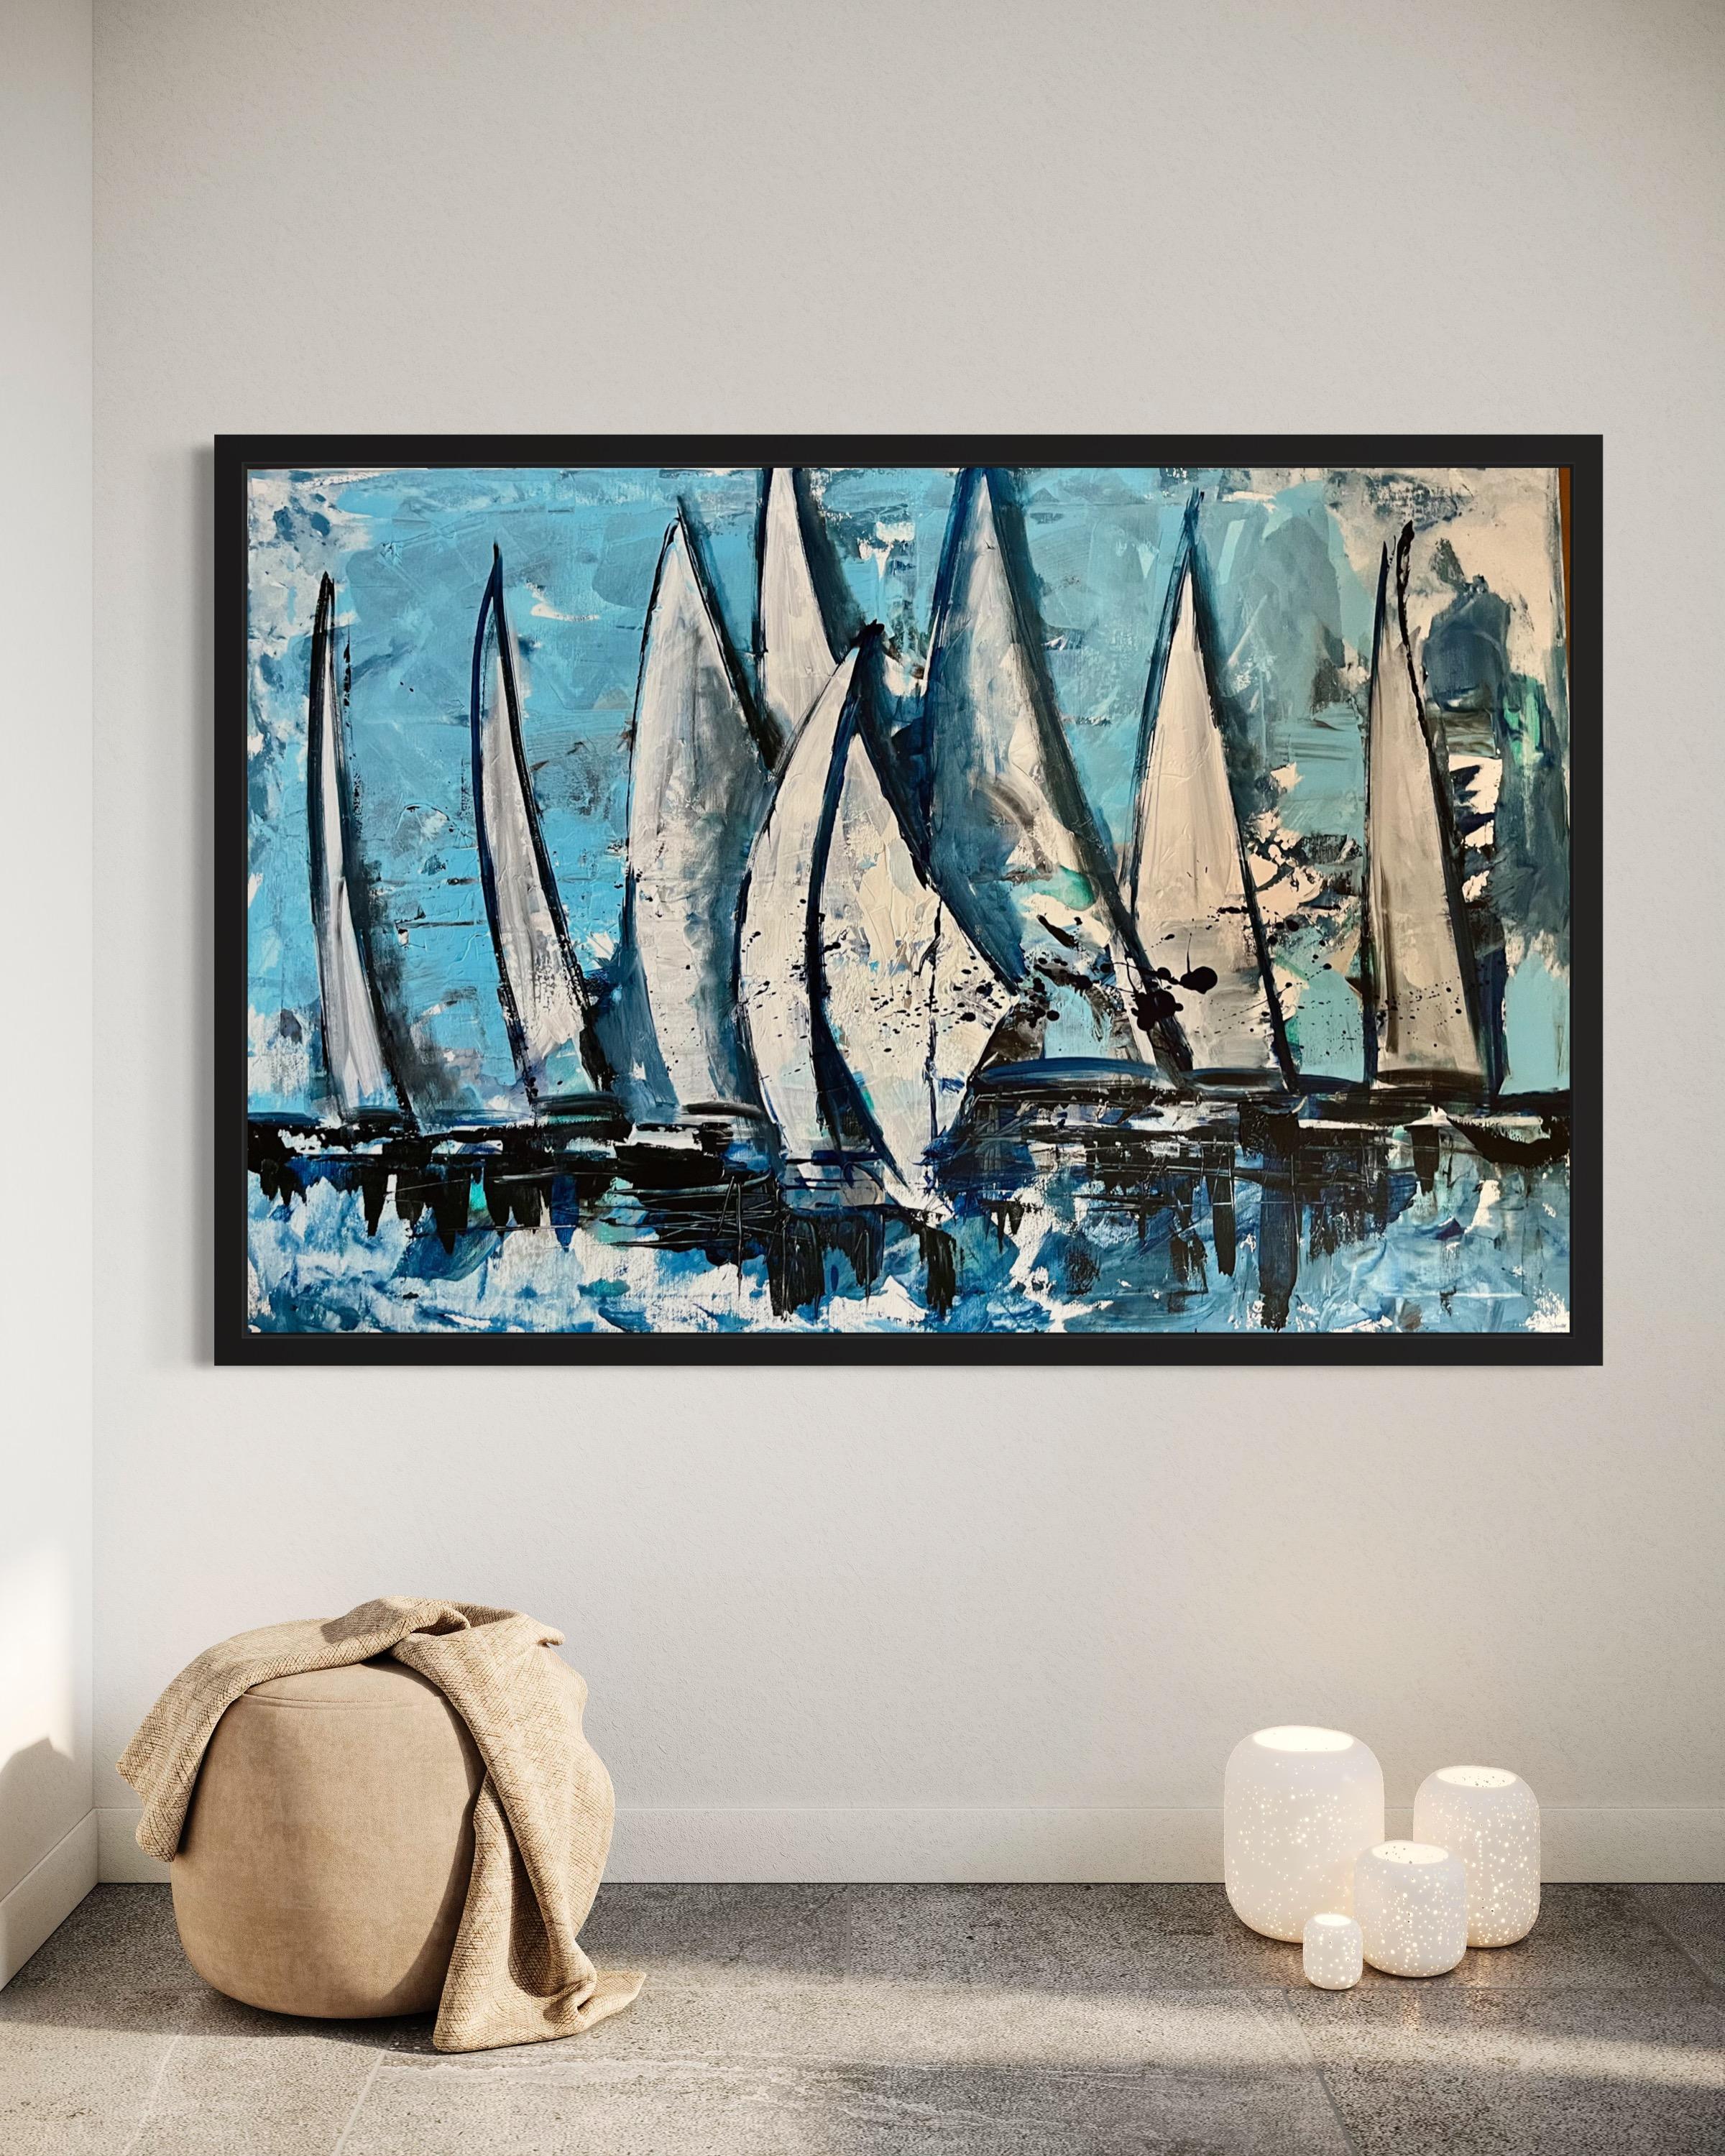 Sails - Painting by Olga Volha Piashko 